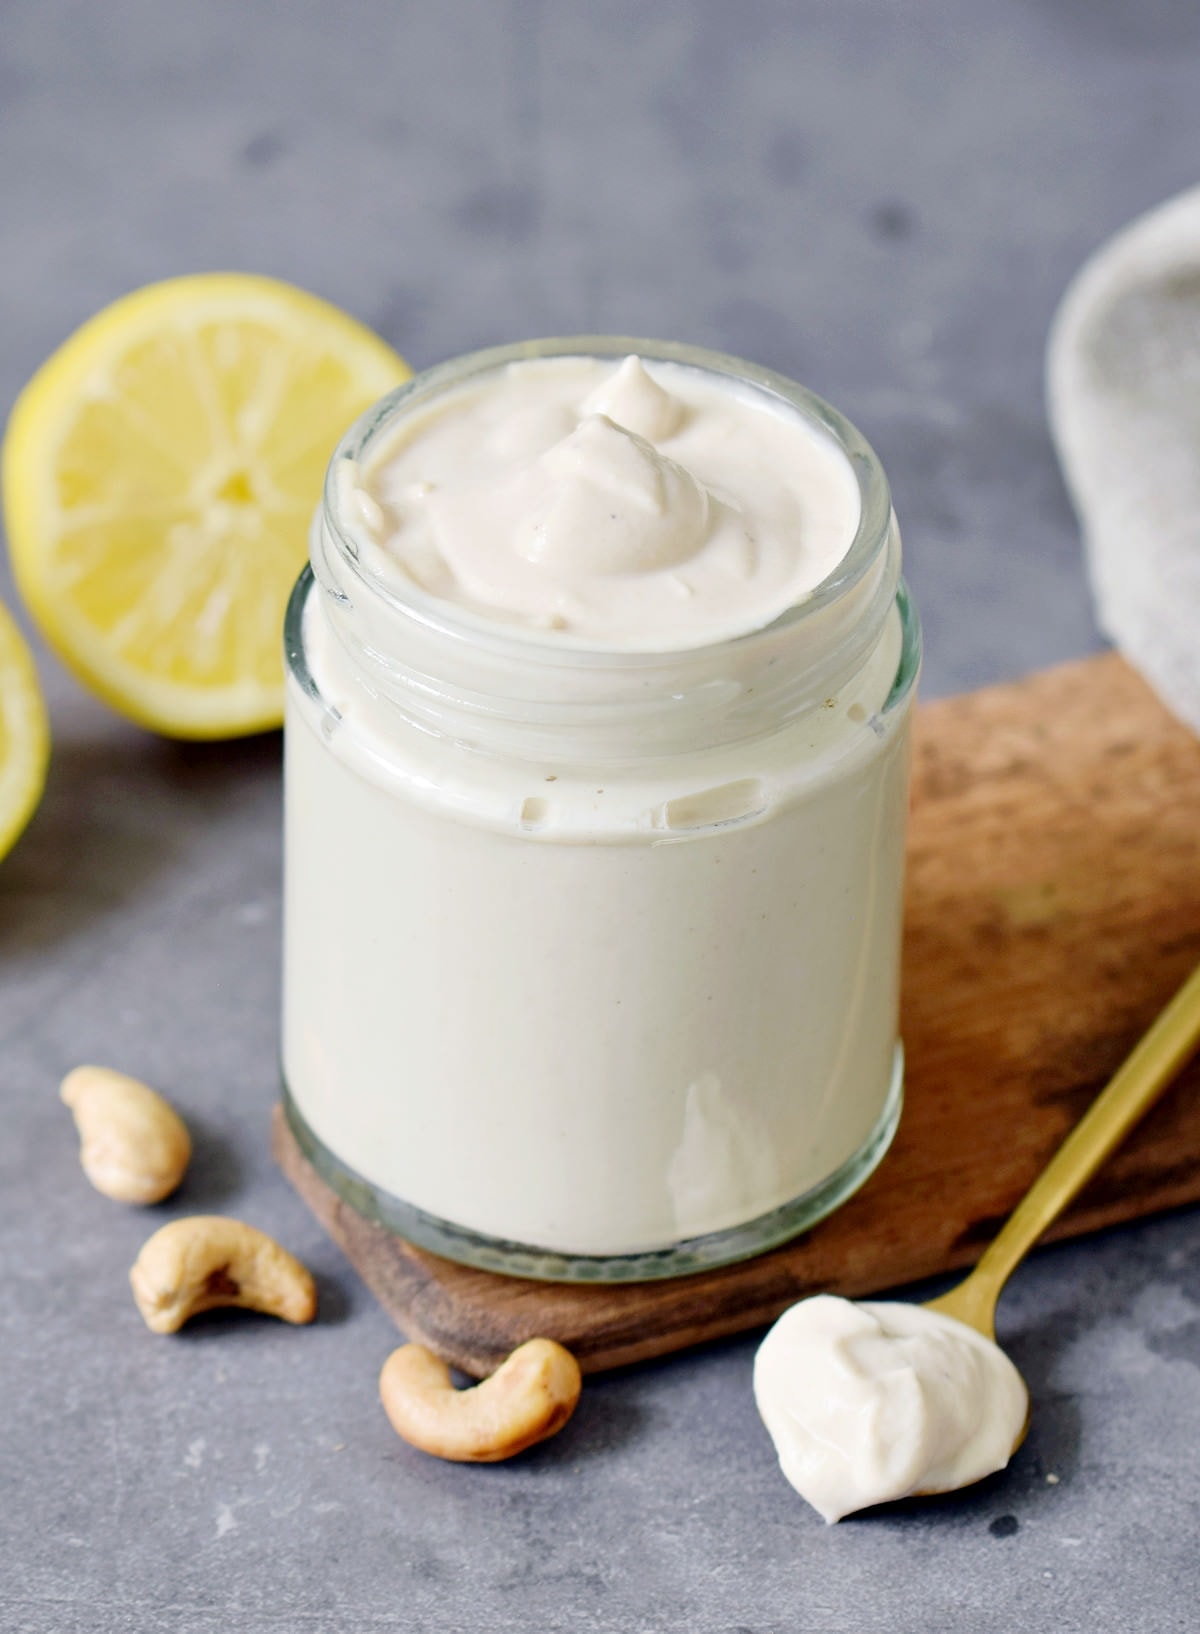 https://elavegan.com/wp-content/uploads/2020/06/vegan-sour-cream-in-a-jar-with-cashews-and-lemon.jpg